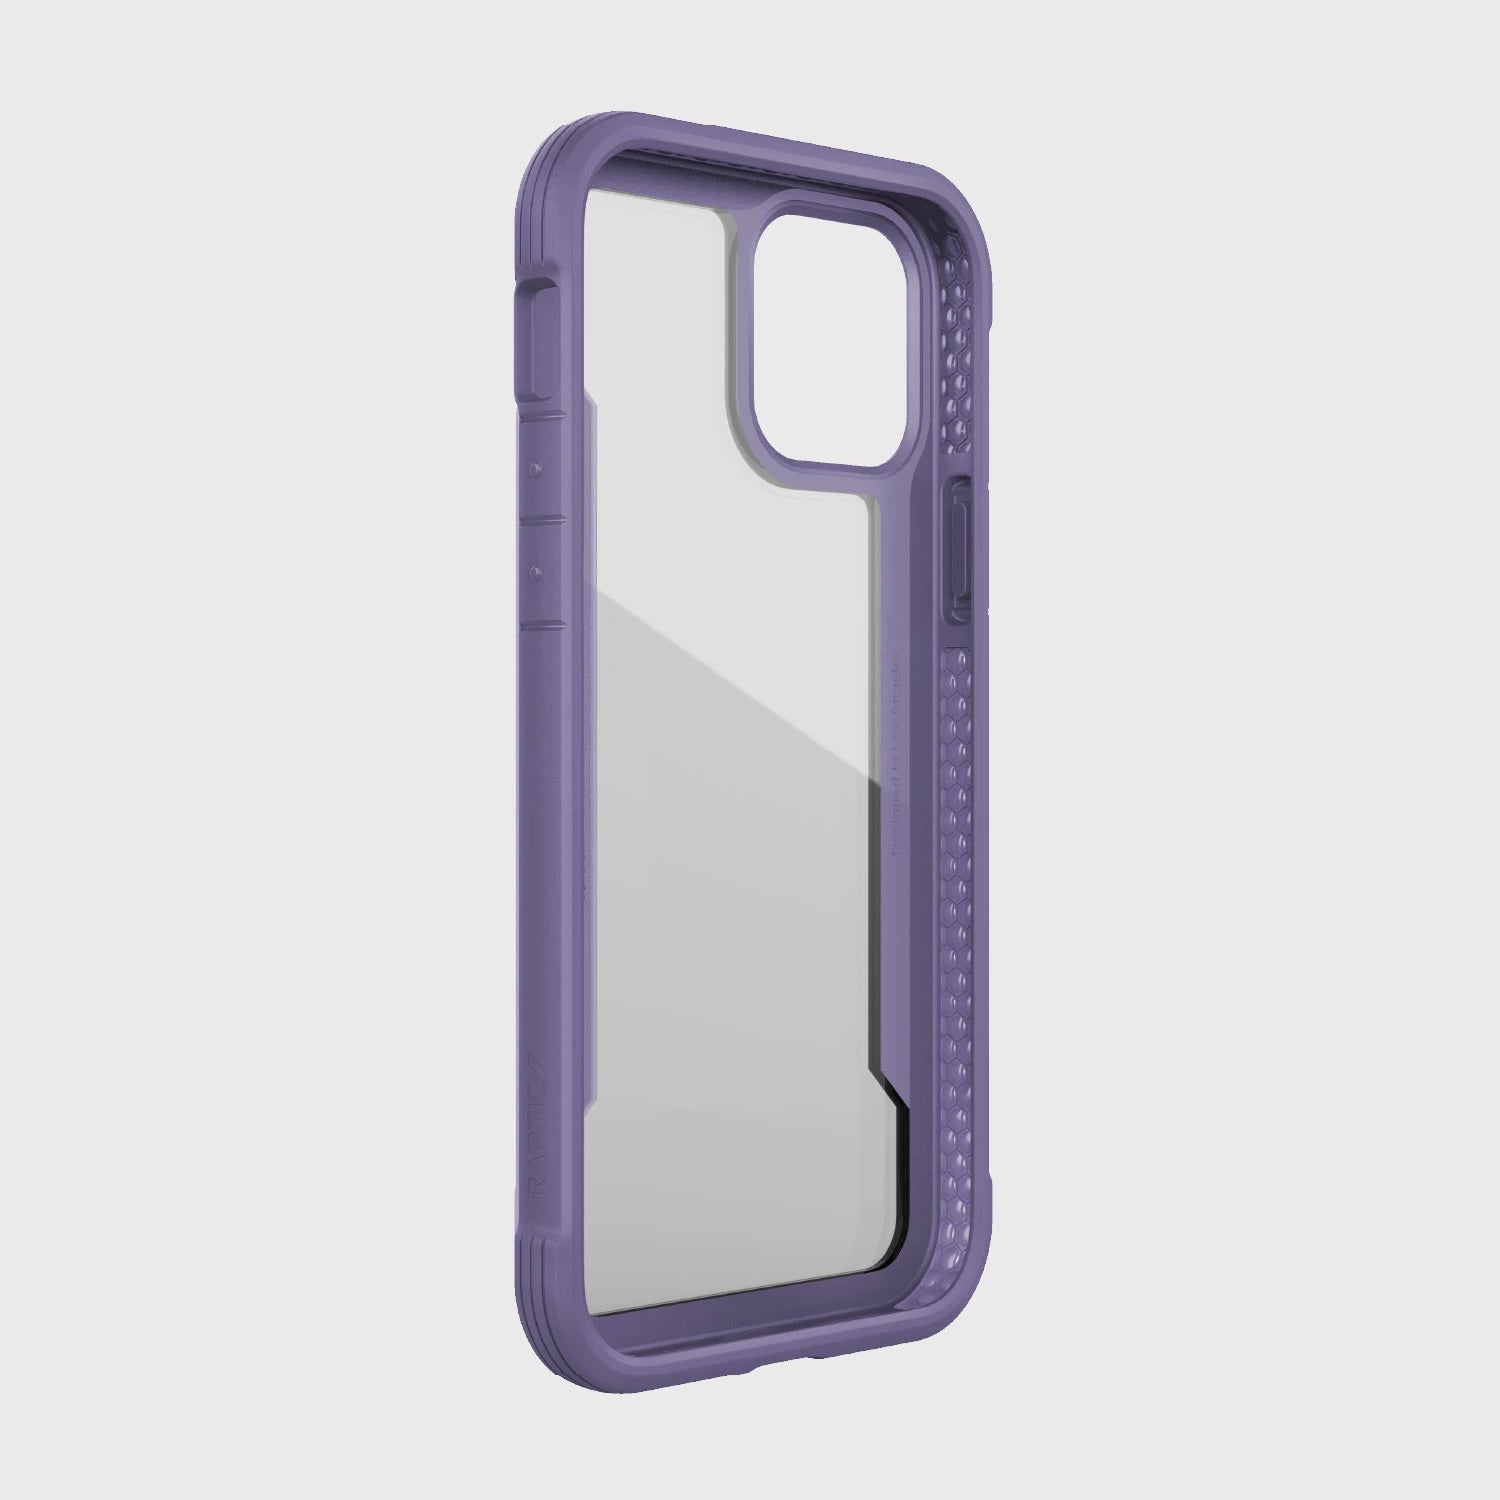 Raptic iPhone 12 & iPhone 12 Pro case - purple.